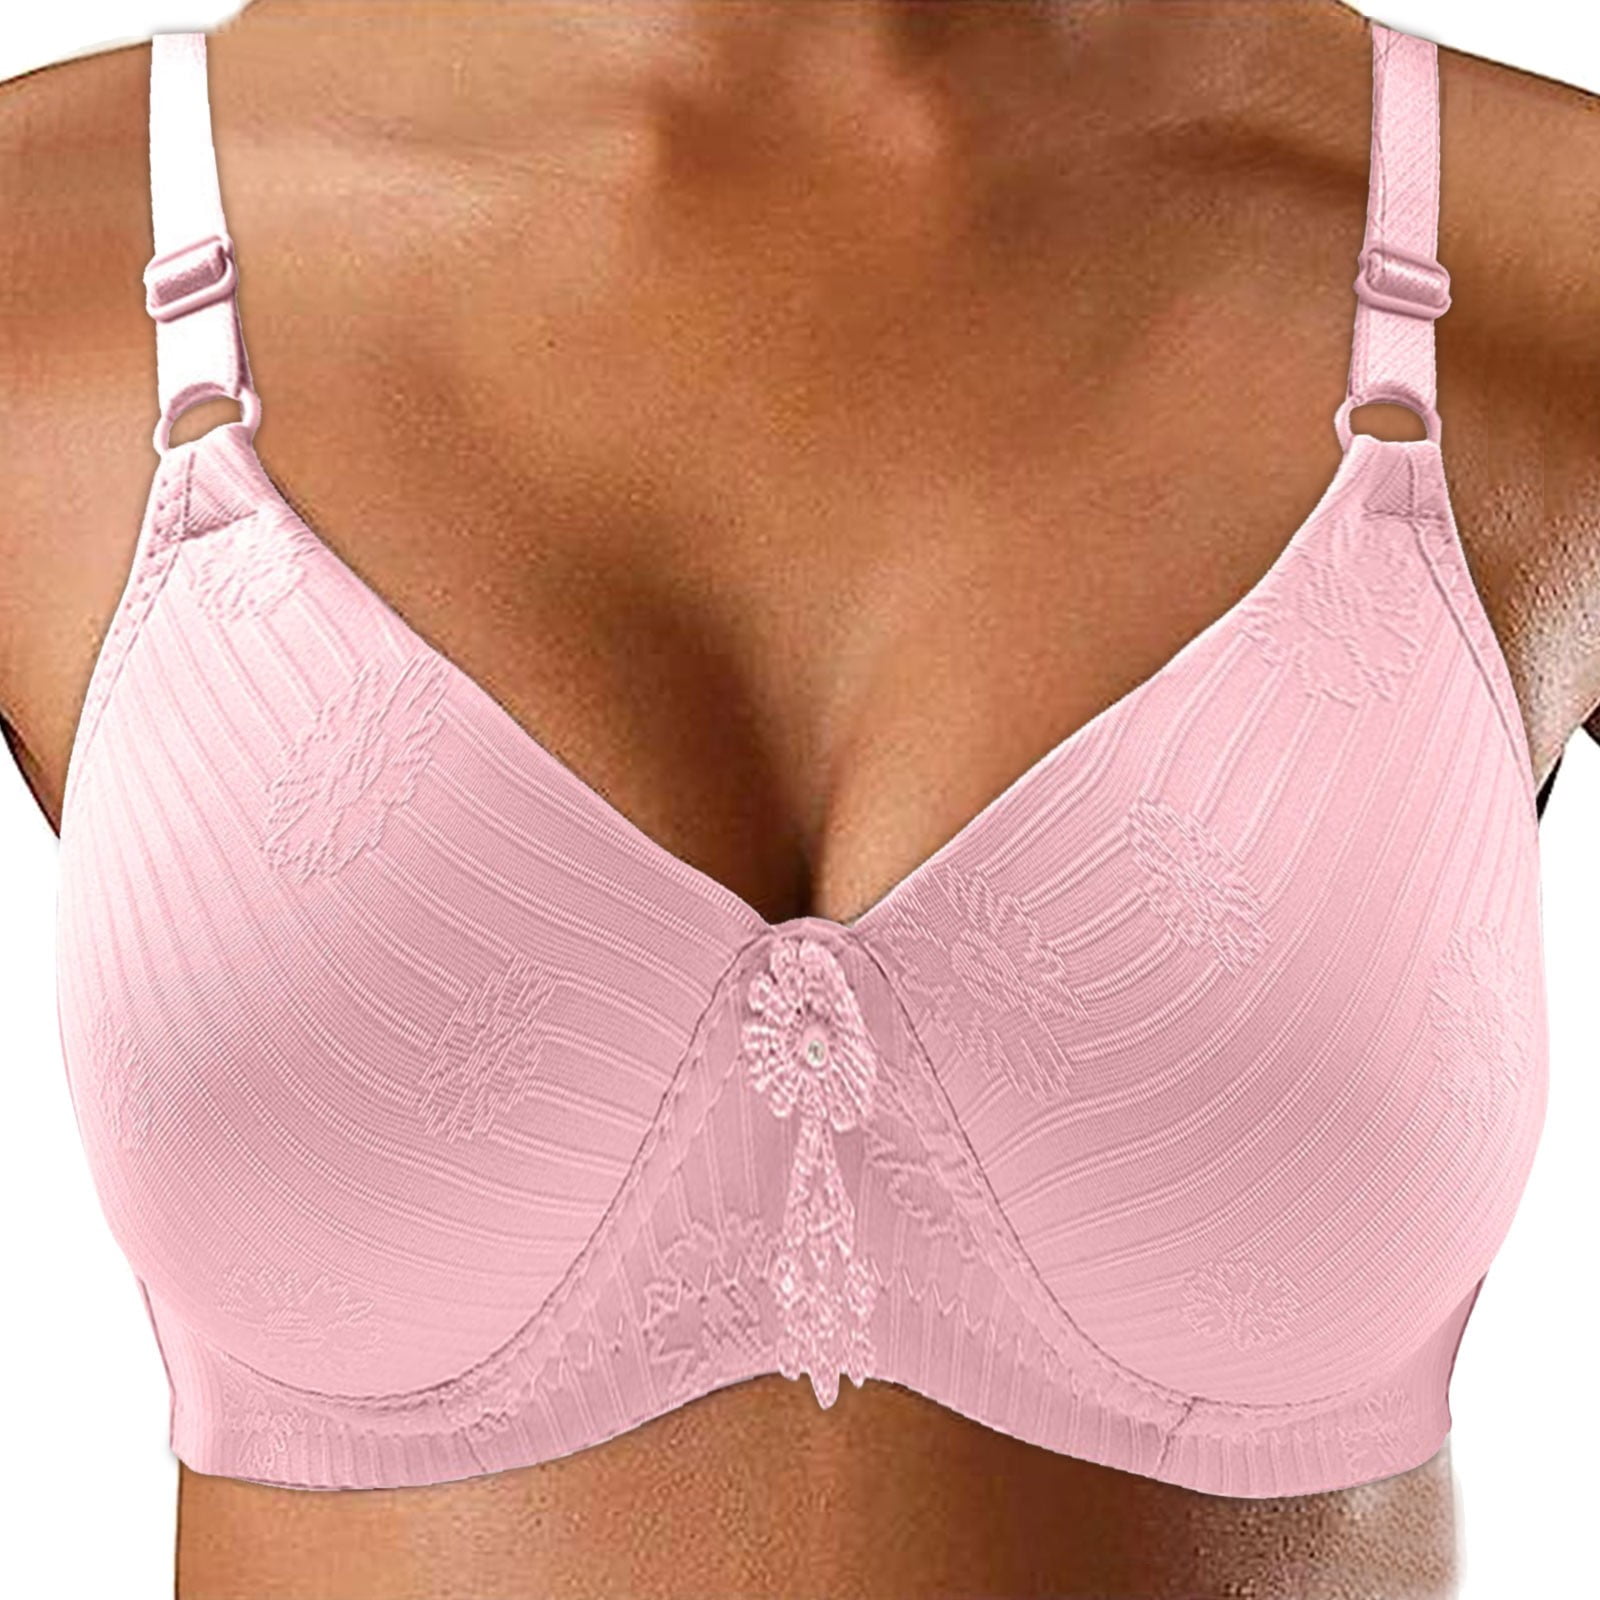 KaLI_store Womens Sports Bras Women’s Push Up Underwire Bra Super Padded  T-Shirt Bra Add Two Cups Pink,40